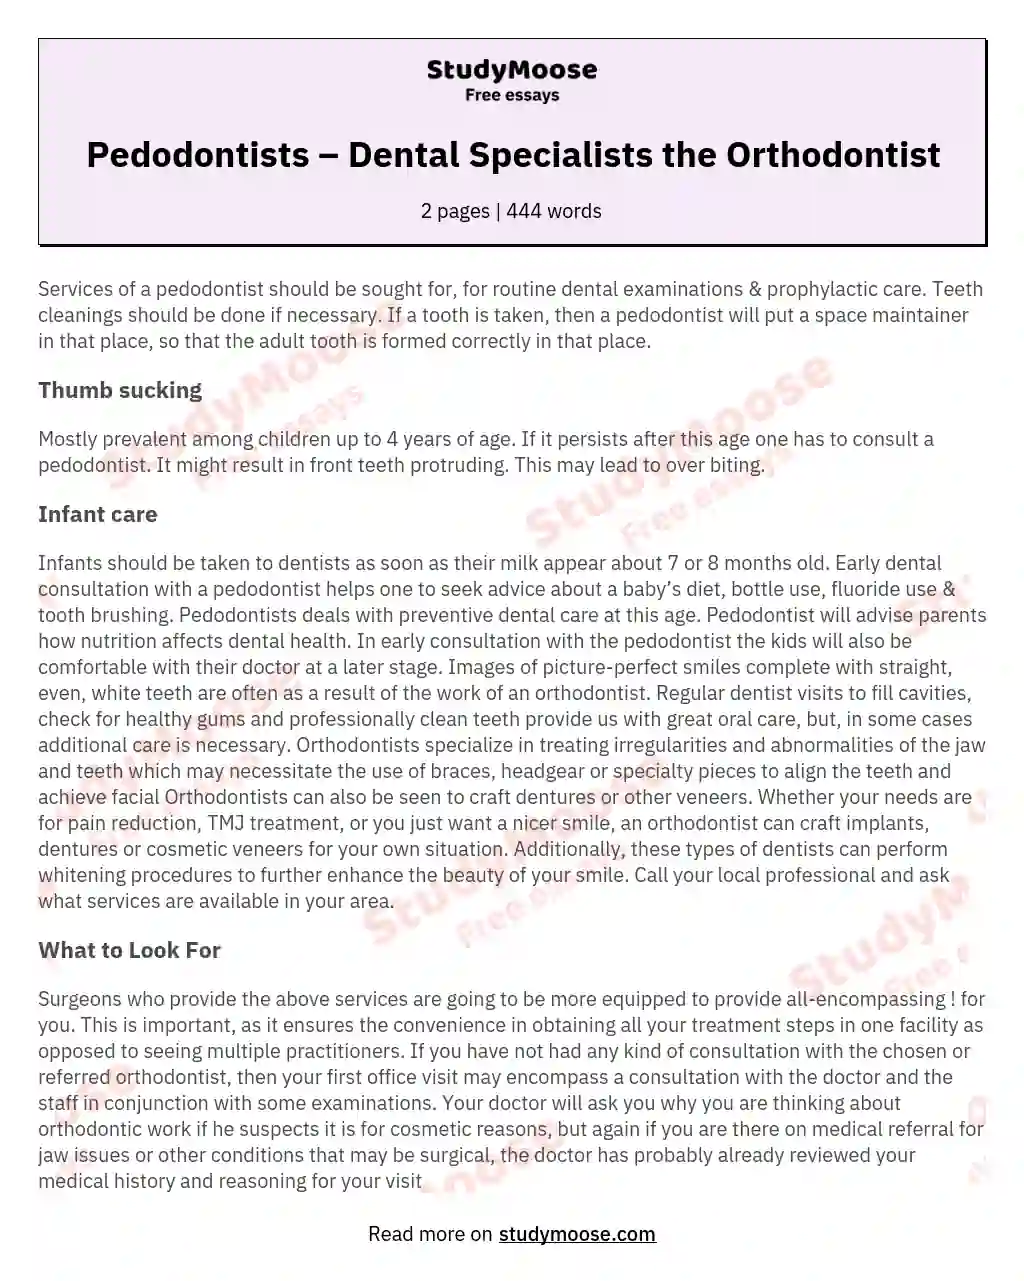 Pedodontists – Dental Specialists the Orthodontist essay